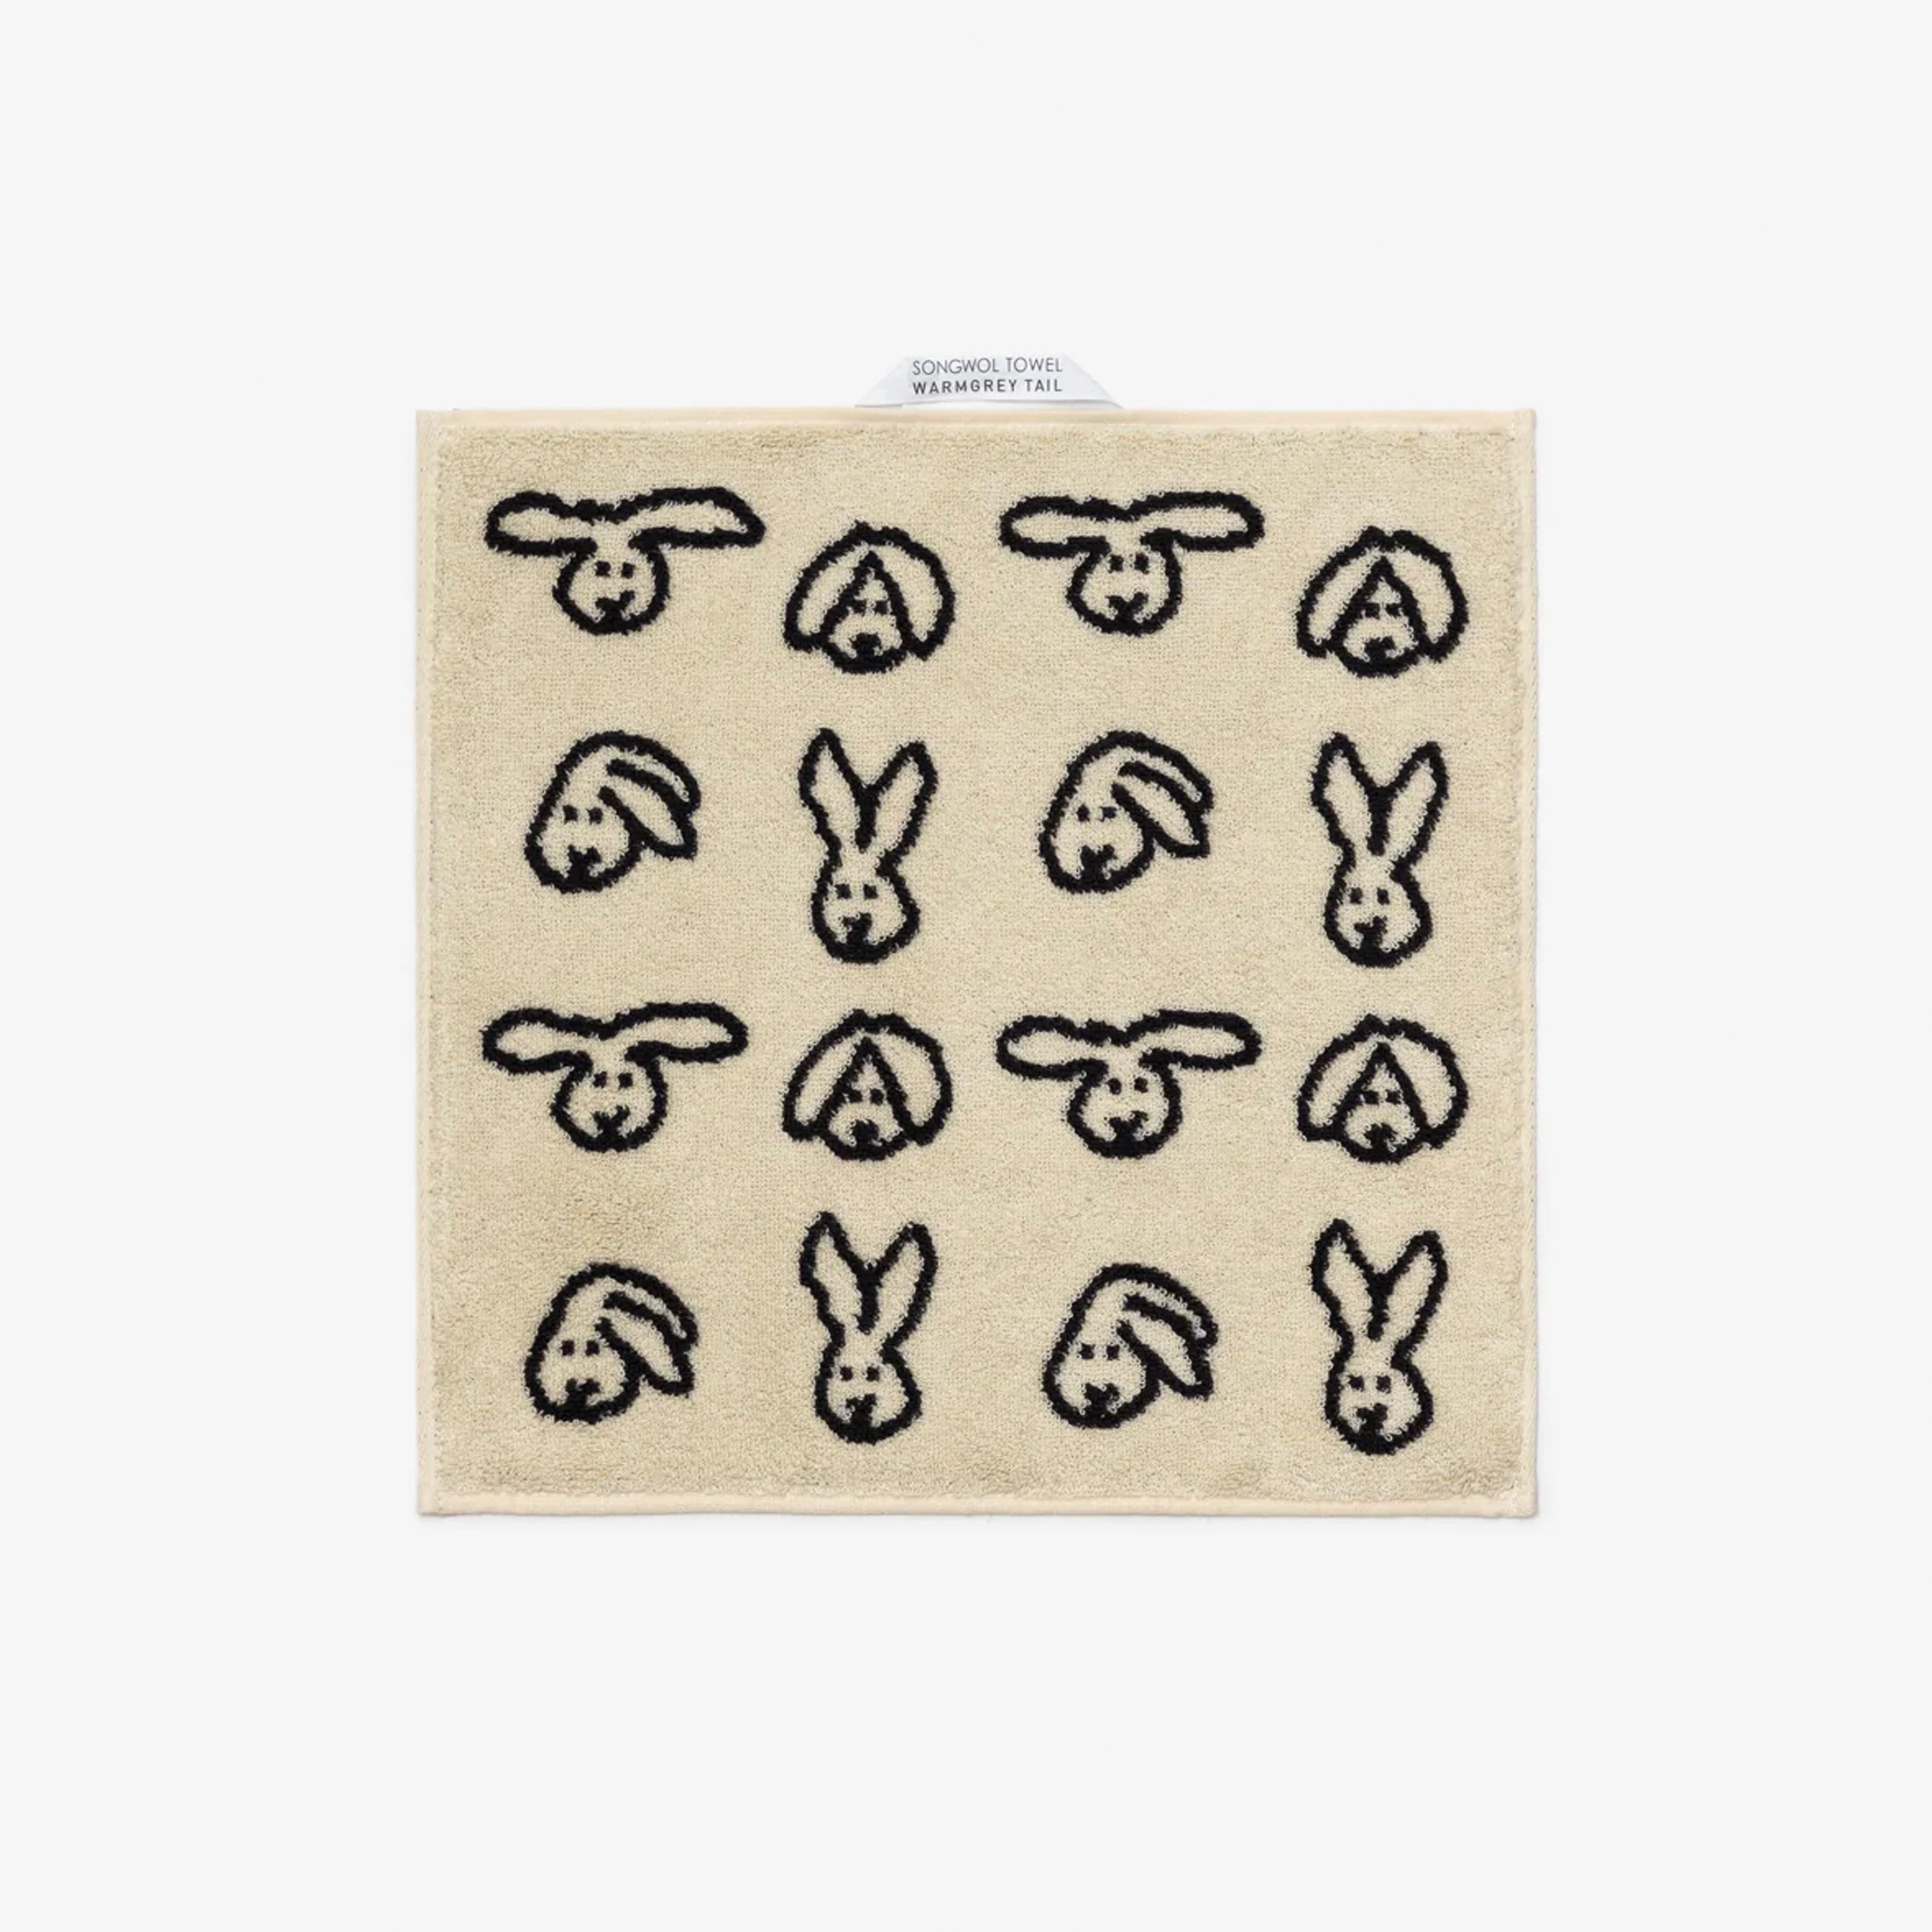 warmgrey-bunny-bunny-hand-towel-1_025806ea-42de-450a-b989-db4ccebc3495.jpg